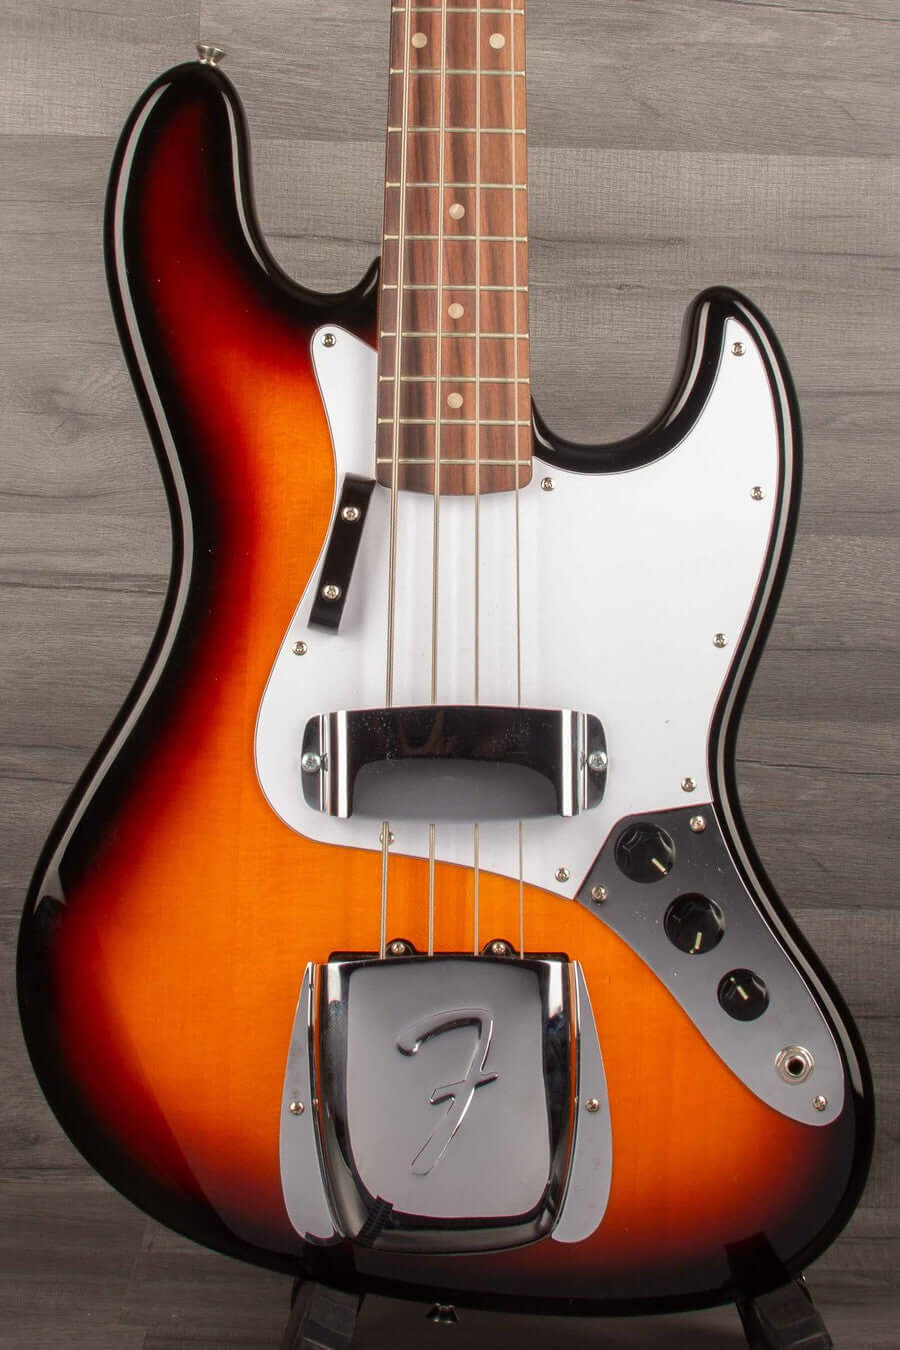 USED - Squier Affinity Jazz Bass - sunburst